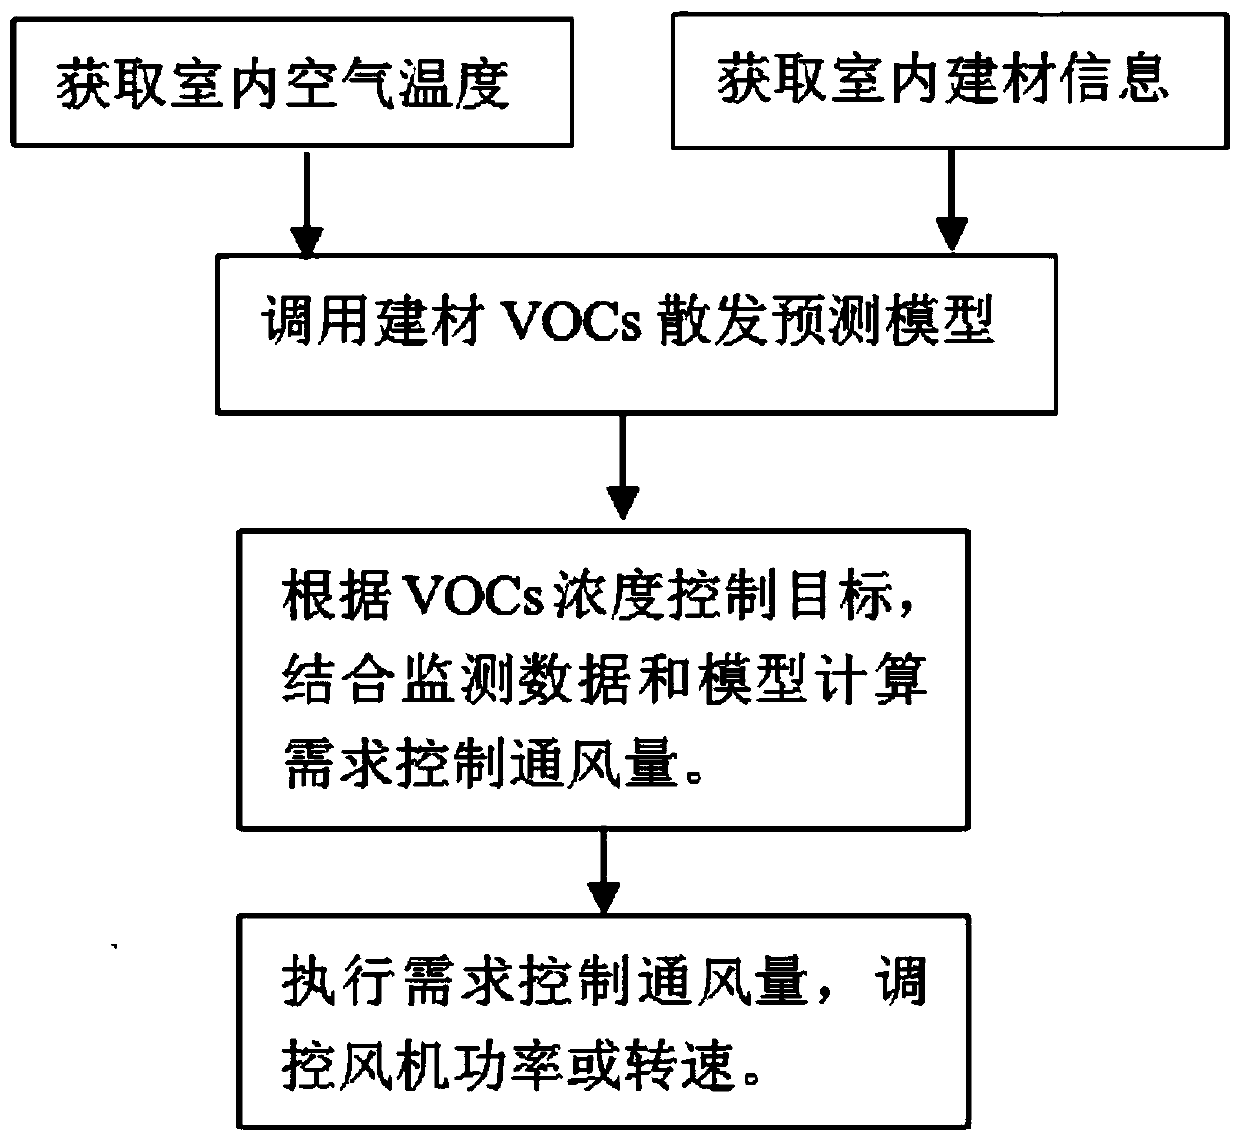 Indoor VOCs dispersion predication based demand control ventilating system and method